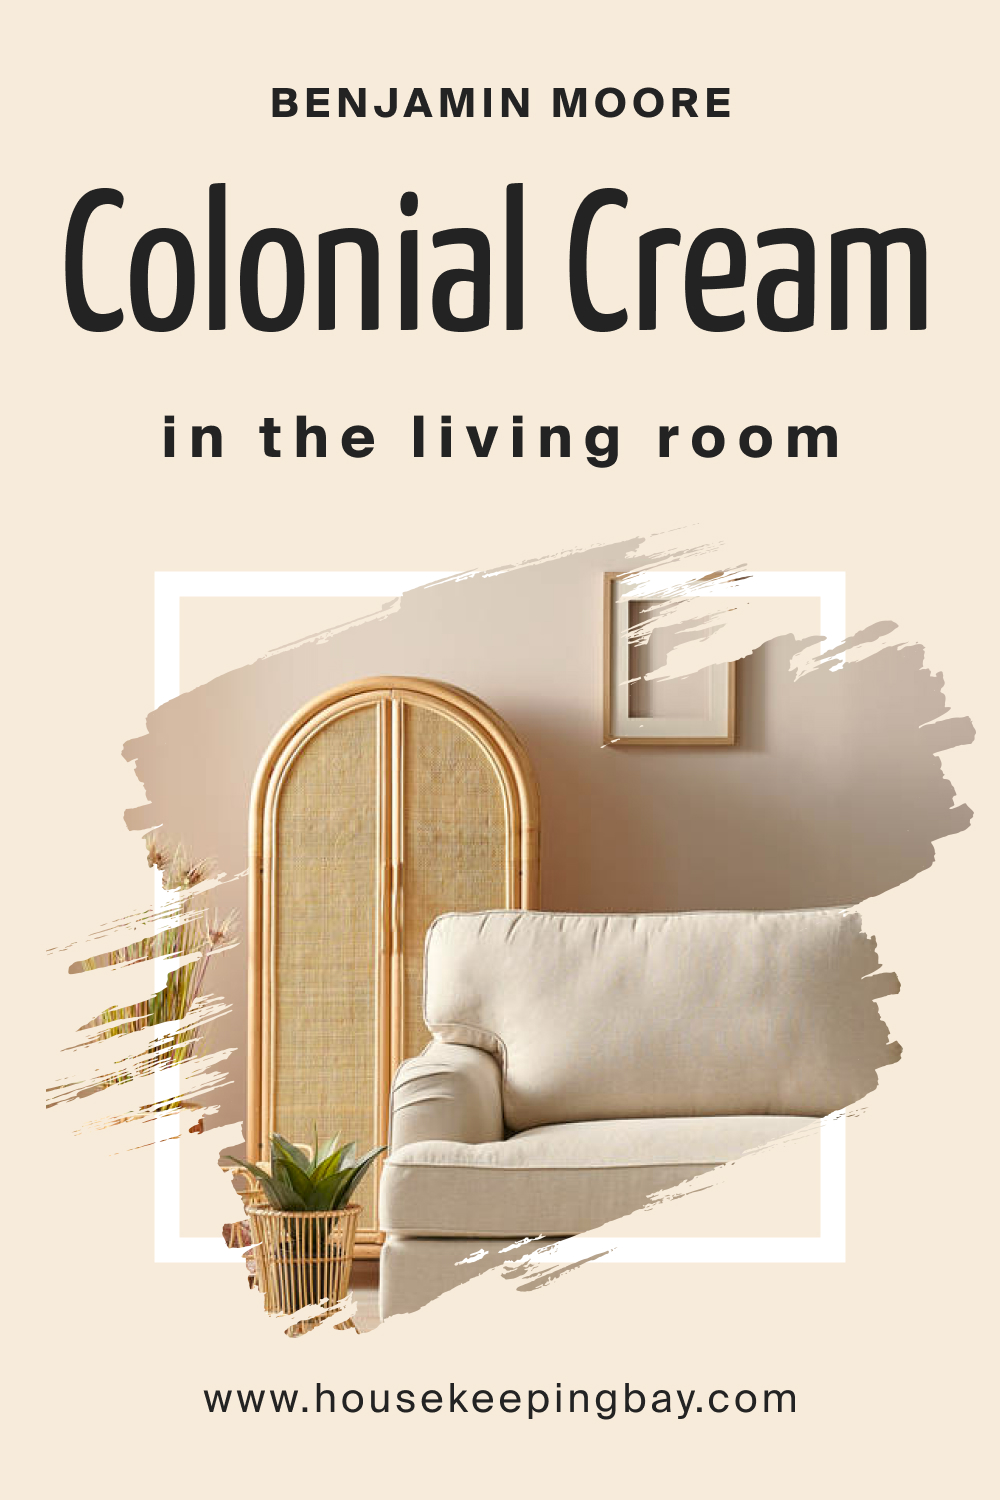 Benjamin Moore. Colonial Cream OC 77 in the Living Room